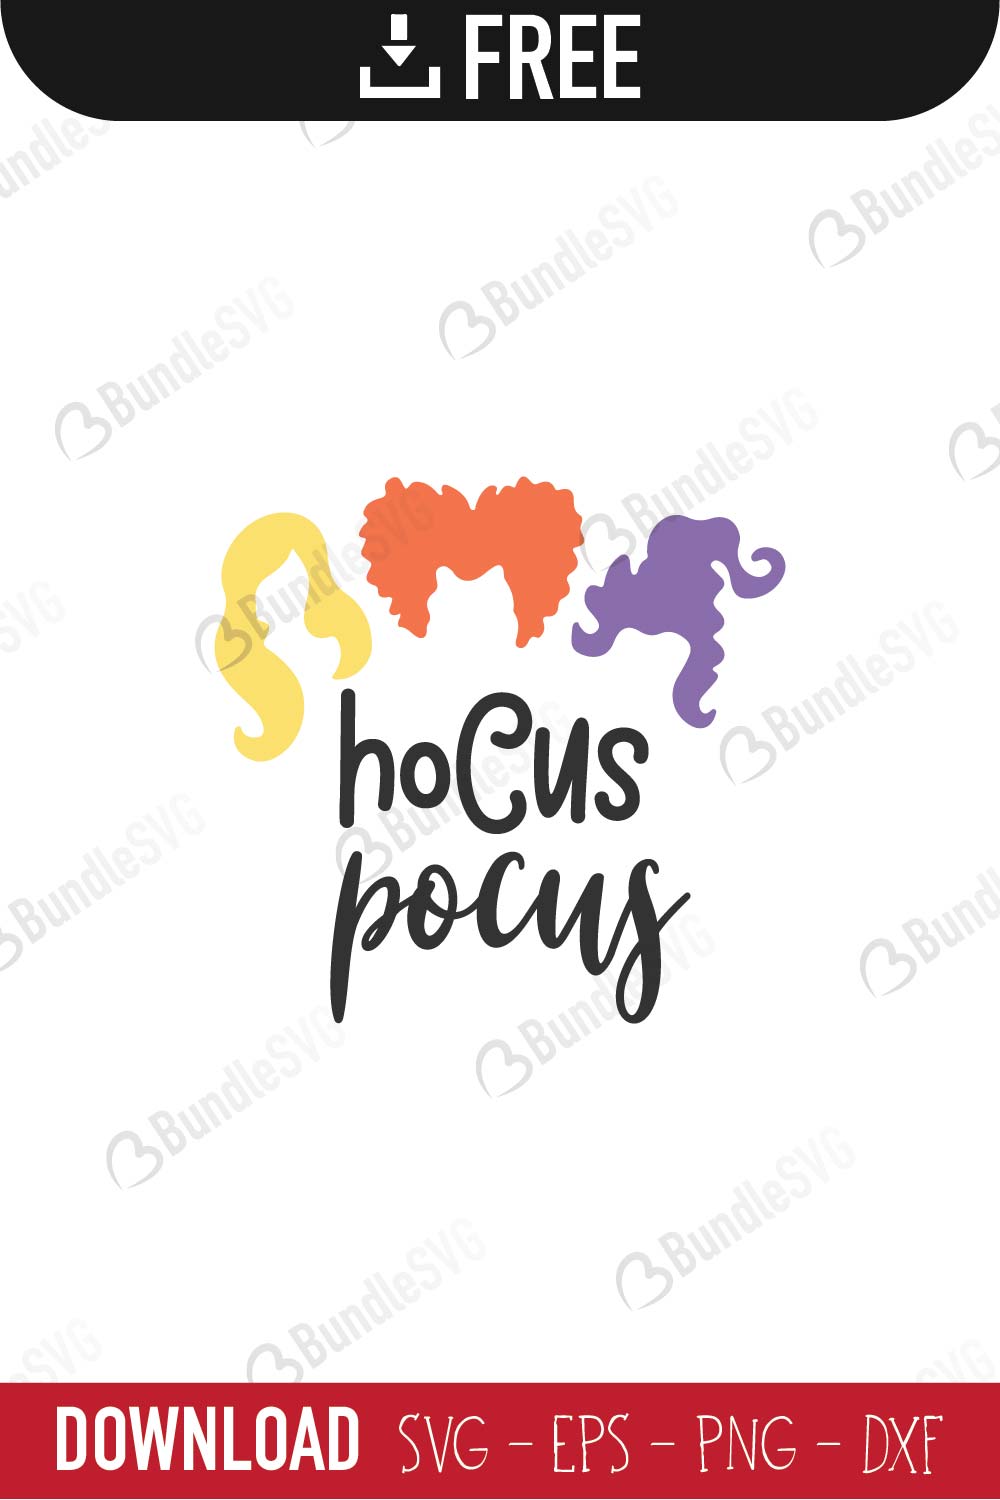 Download Hocus Pocus SVG Cut Files Free Download | BundleSVG